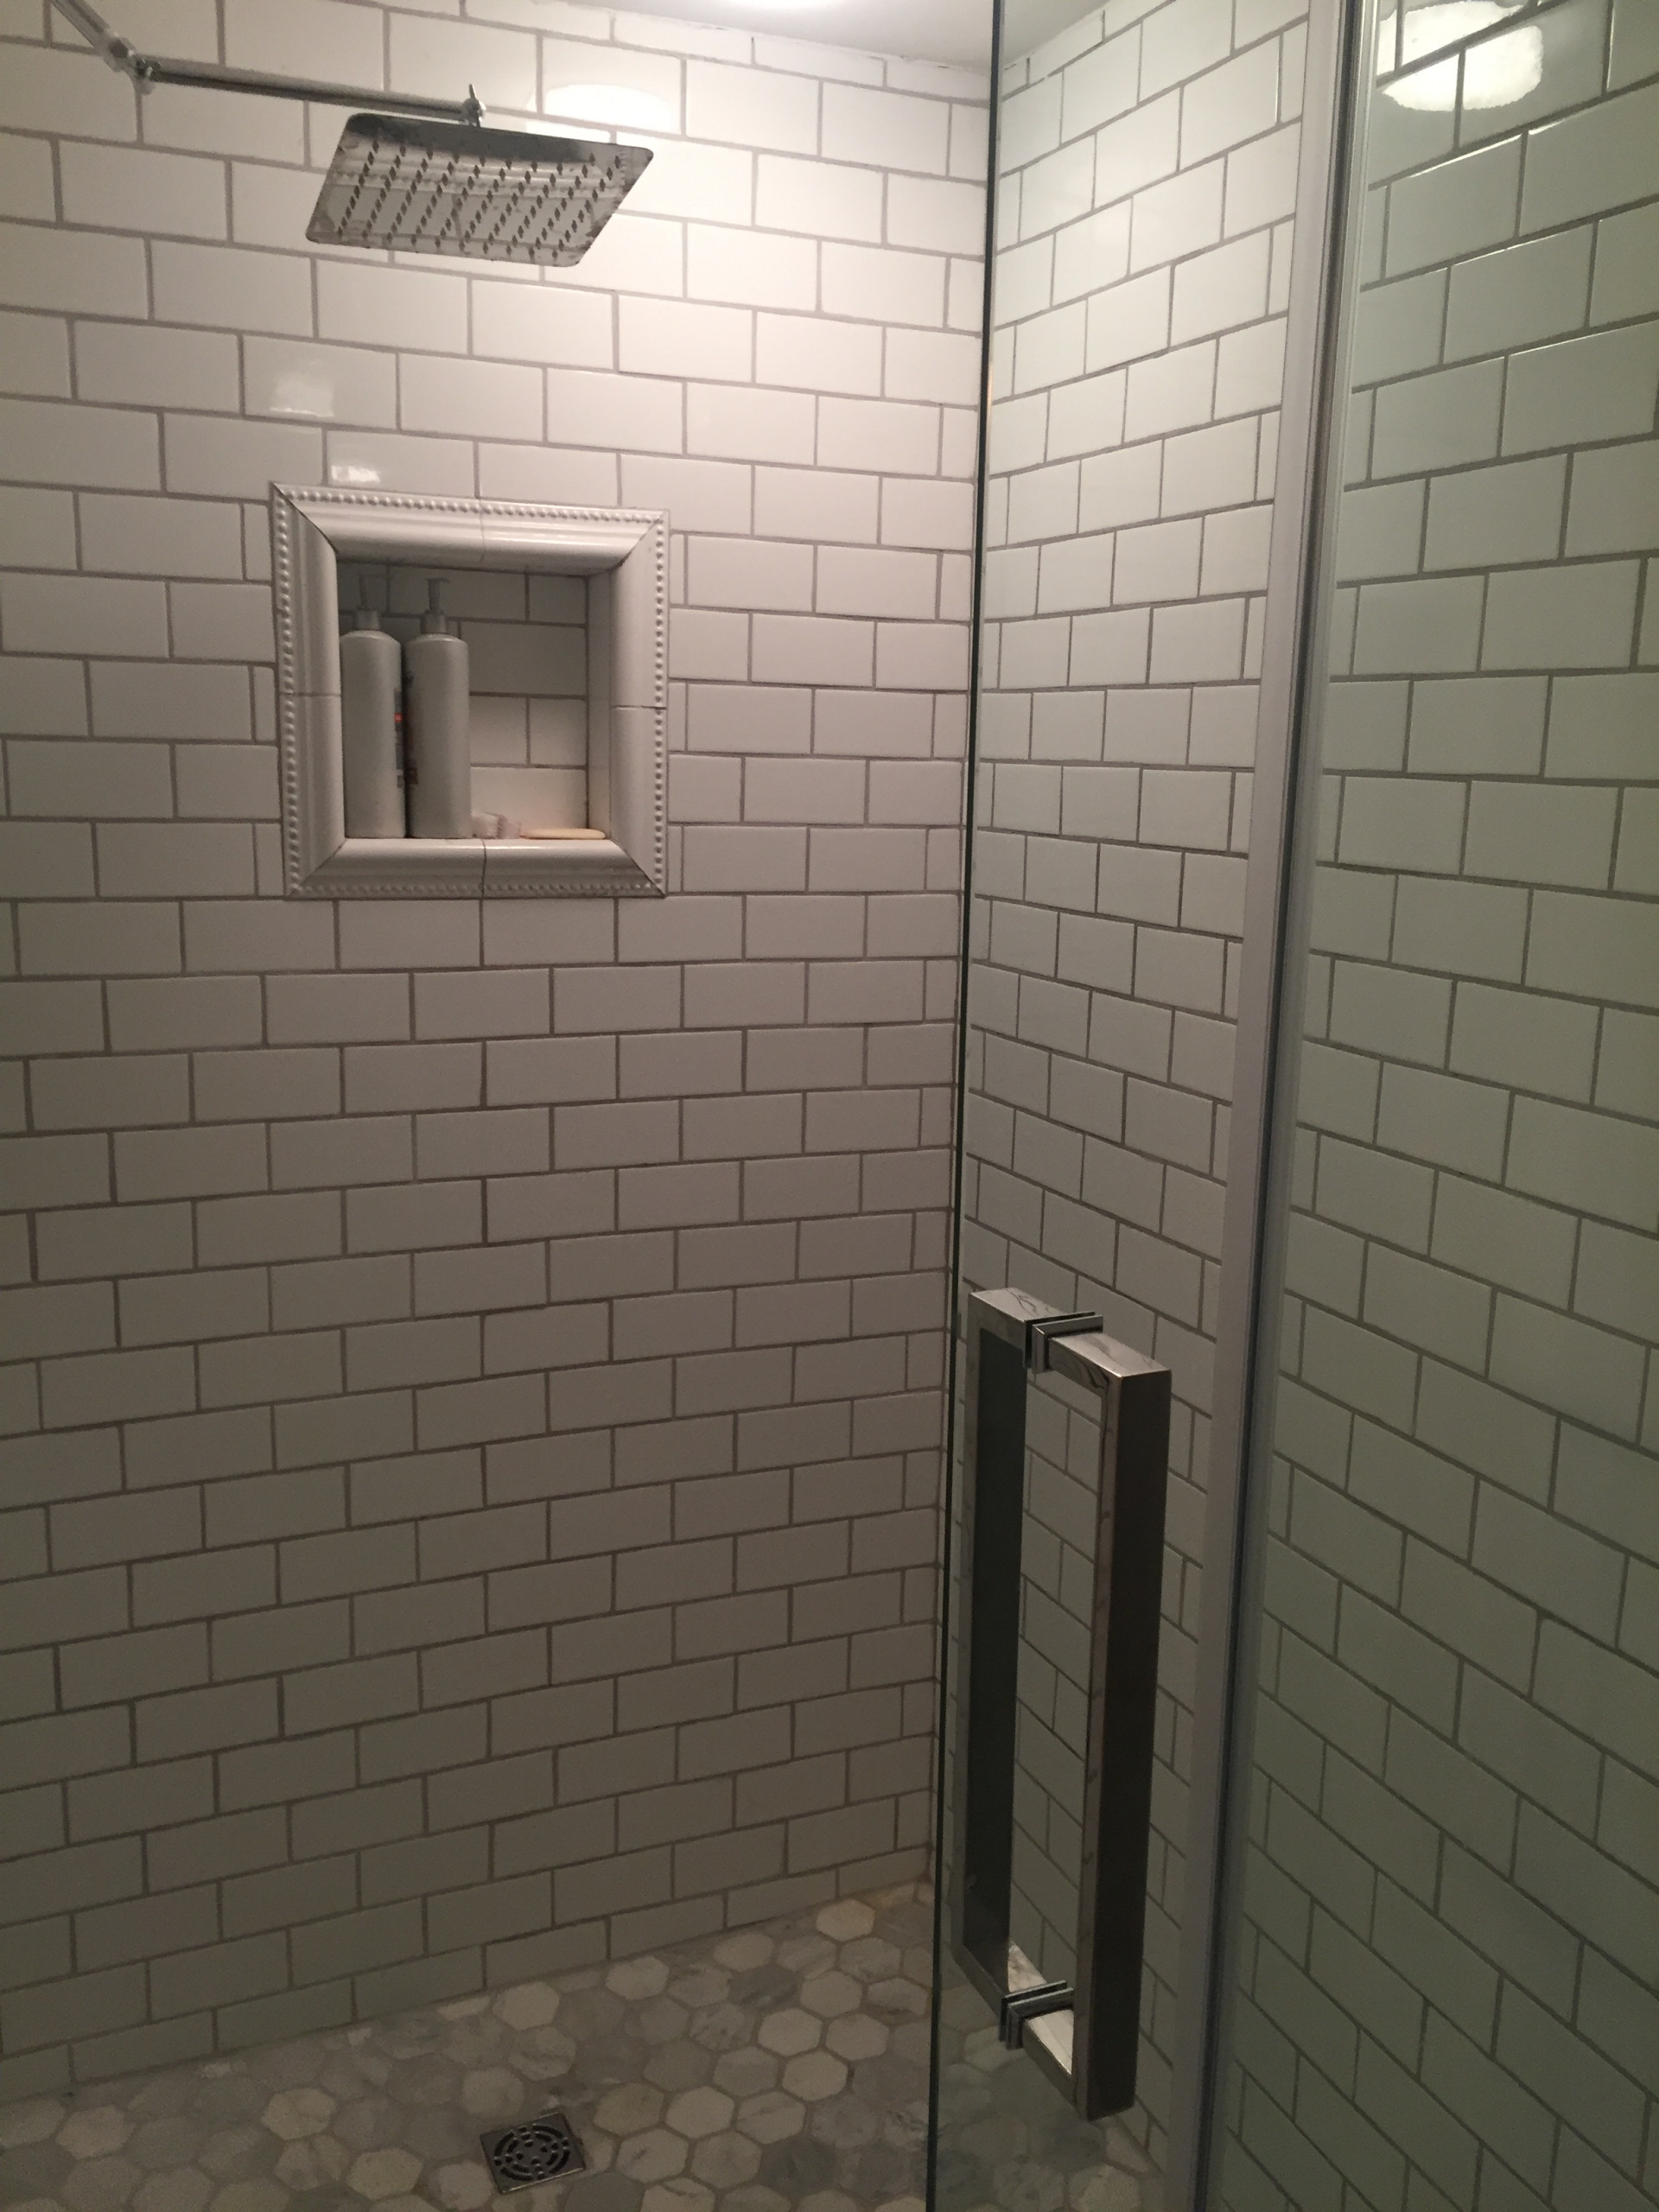 Bathroom and tile works